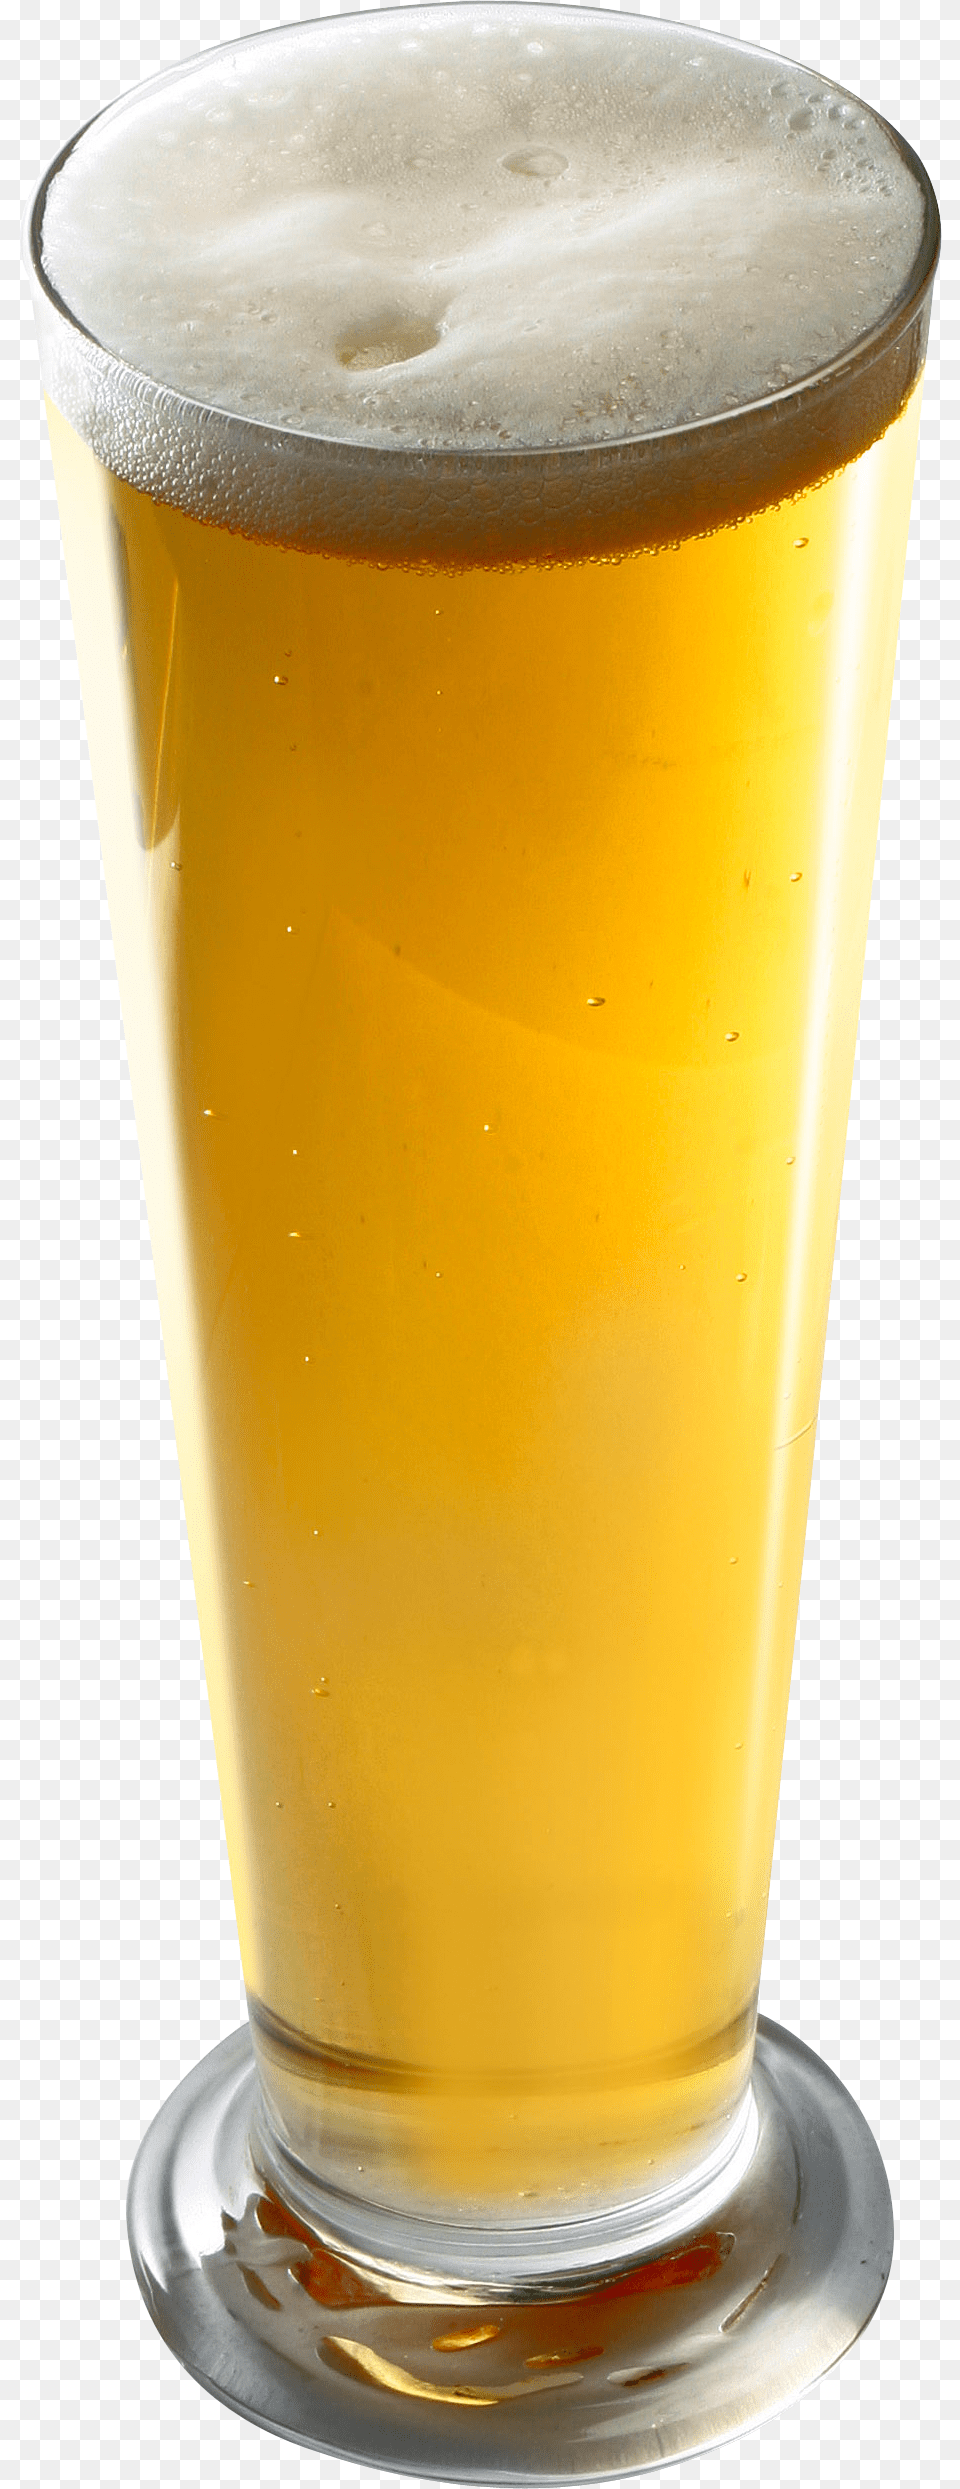 Beer, Alcohol, Beer Glass, Beverage, Glass Png Image